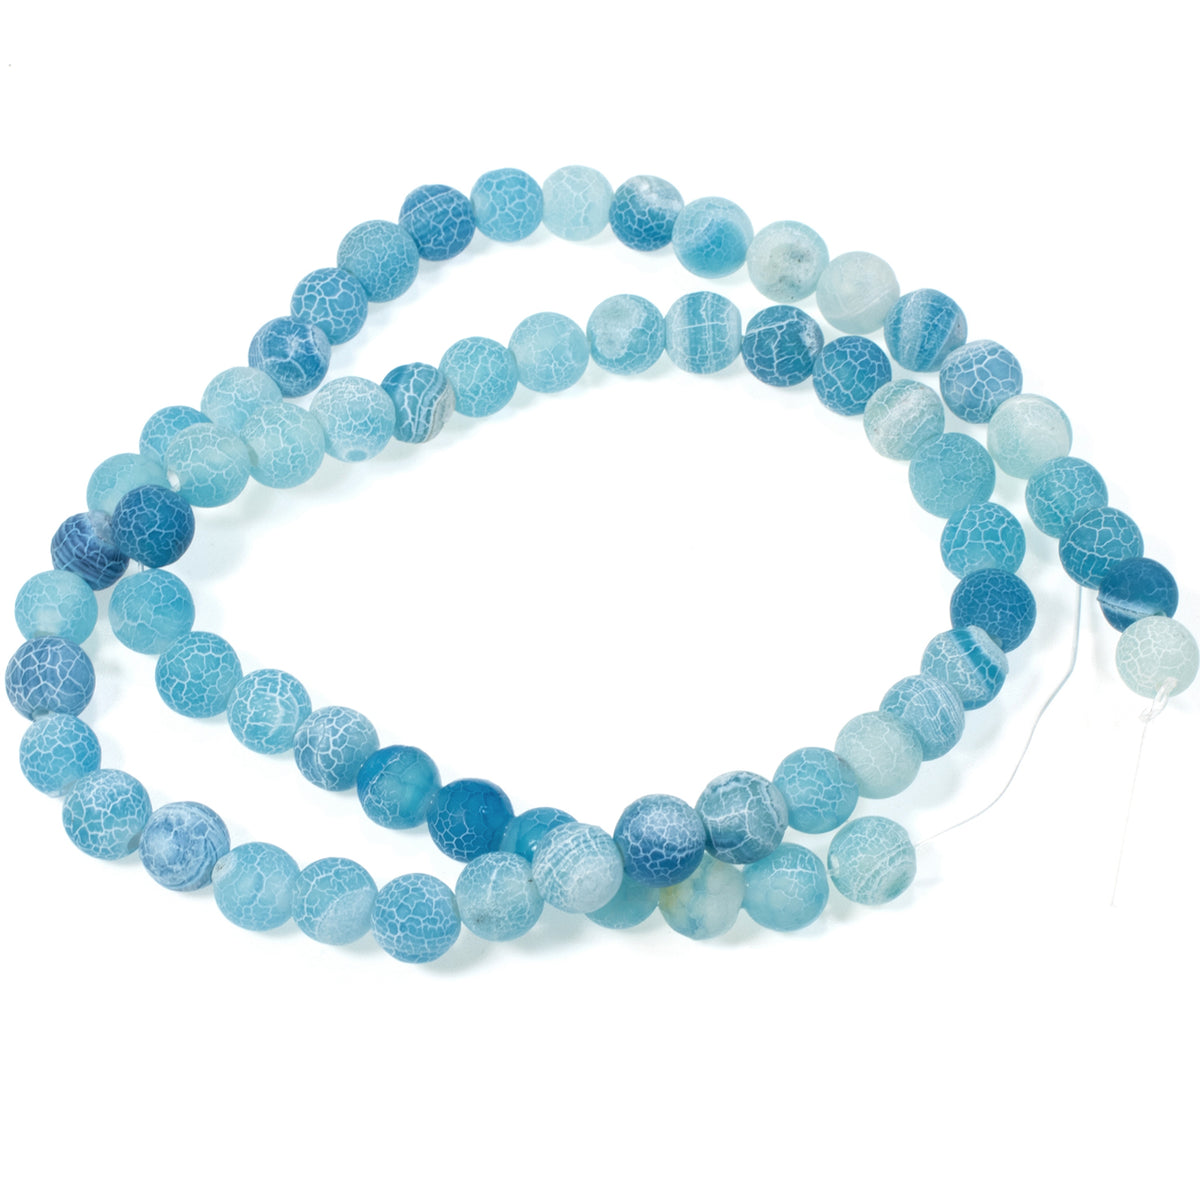 10mm Dragon Vein Agate Beads in Oceanic Aqua Blue | Hackberry Creek